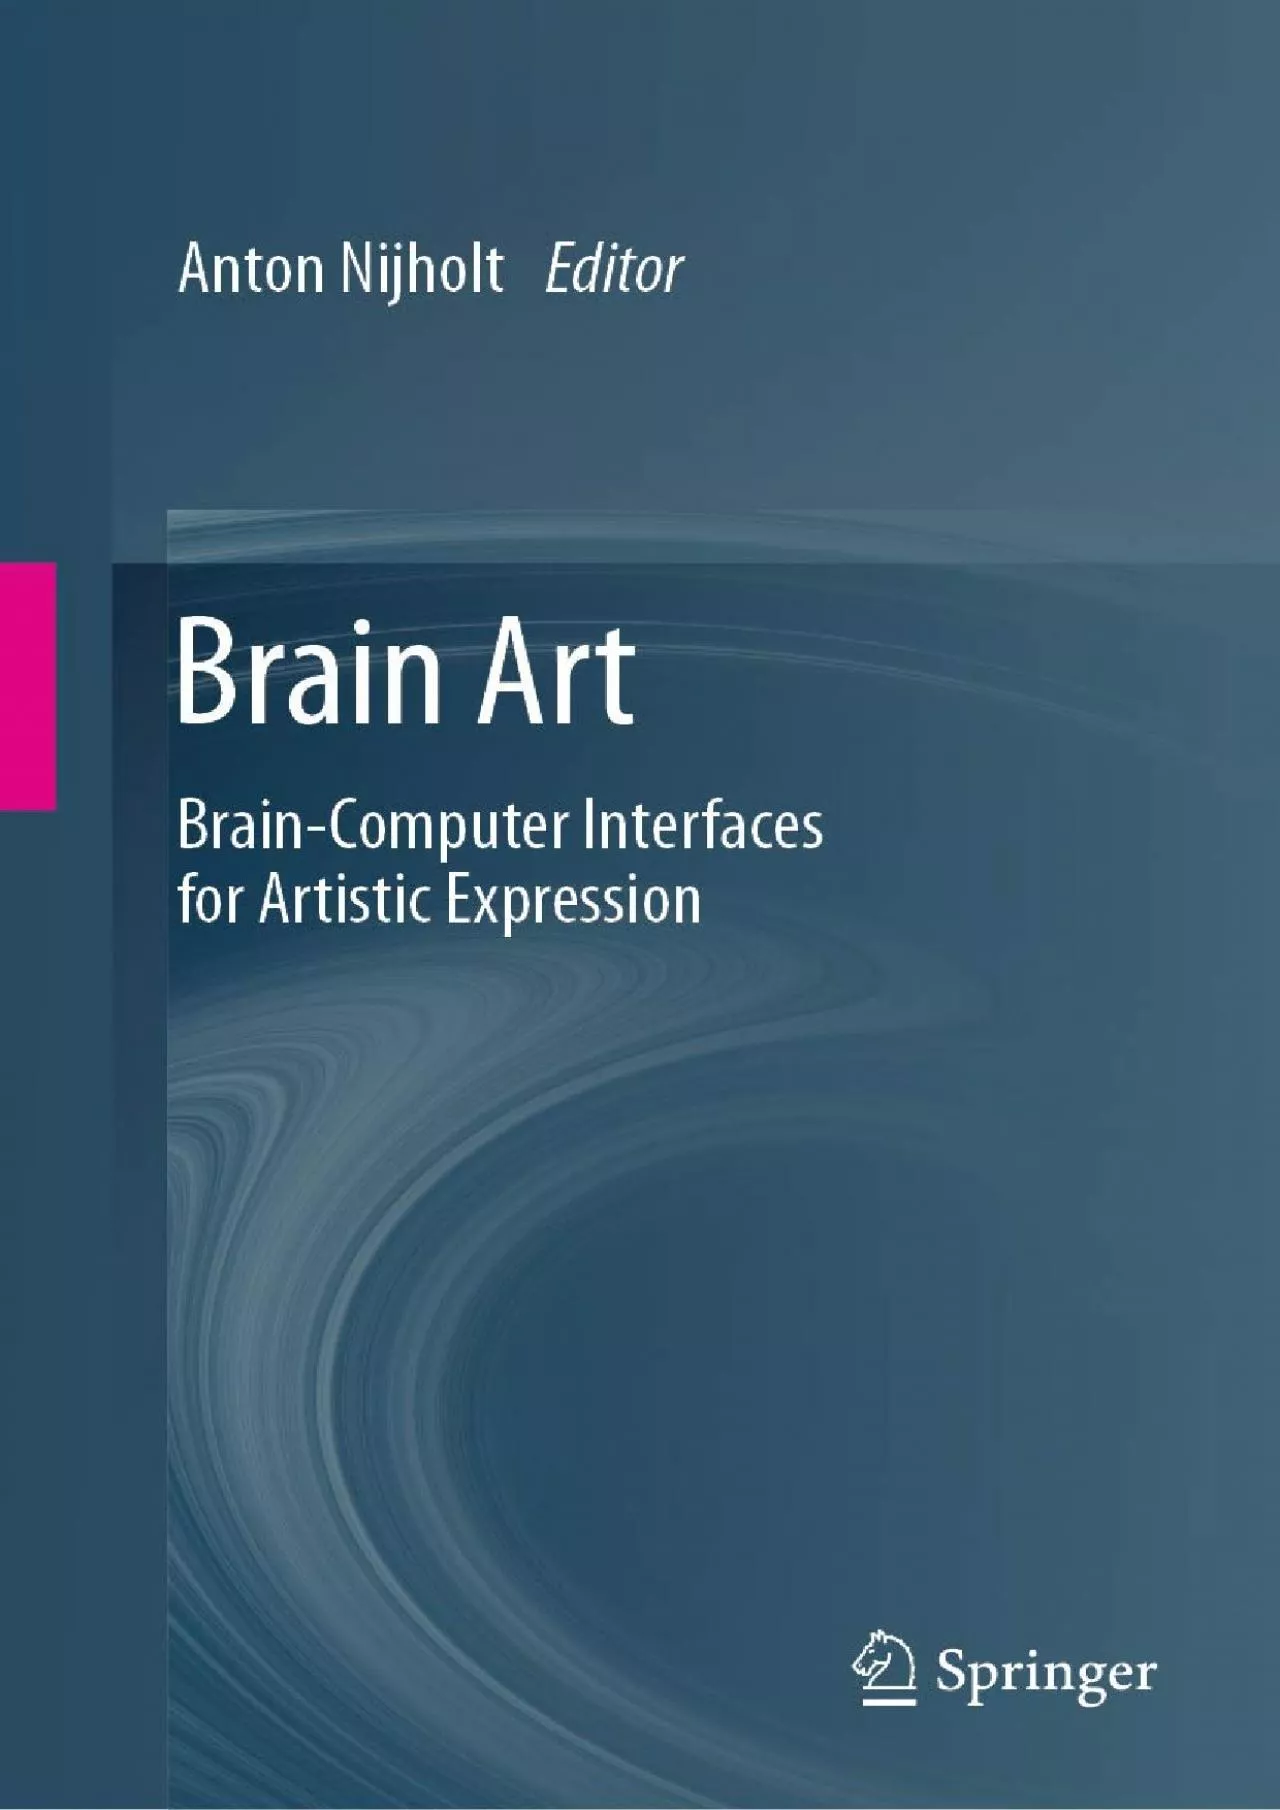 (BOOK)-Brain Art Brain-Computer Interfaces for Artistic Expression